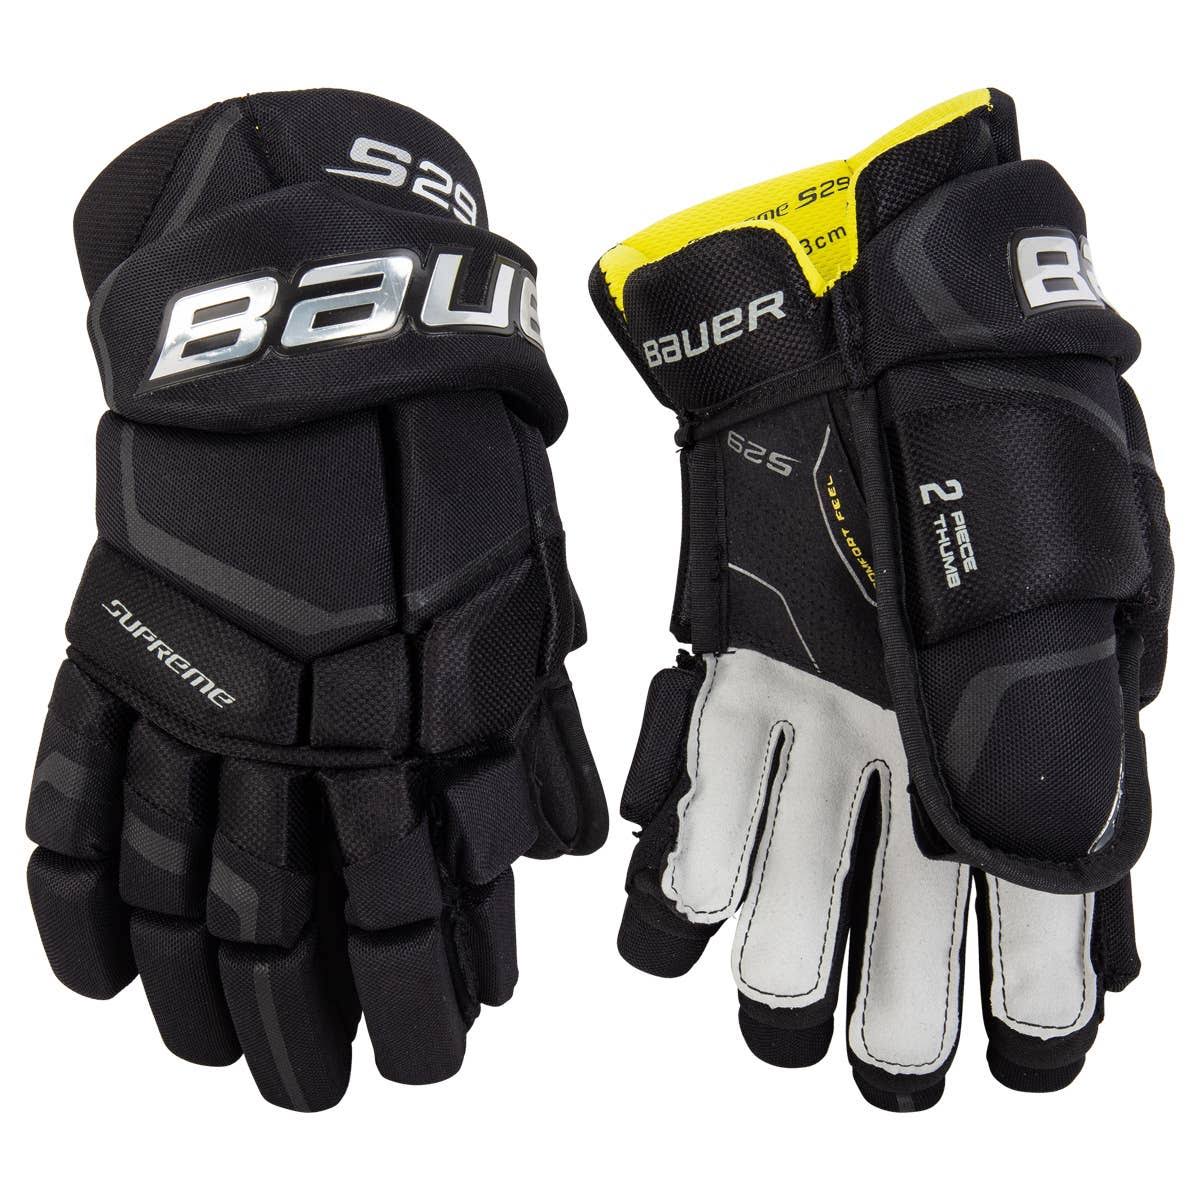 Bauer Supreme S29 Senior Hockey Gloves - Black, Size 15